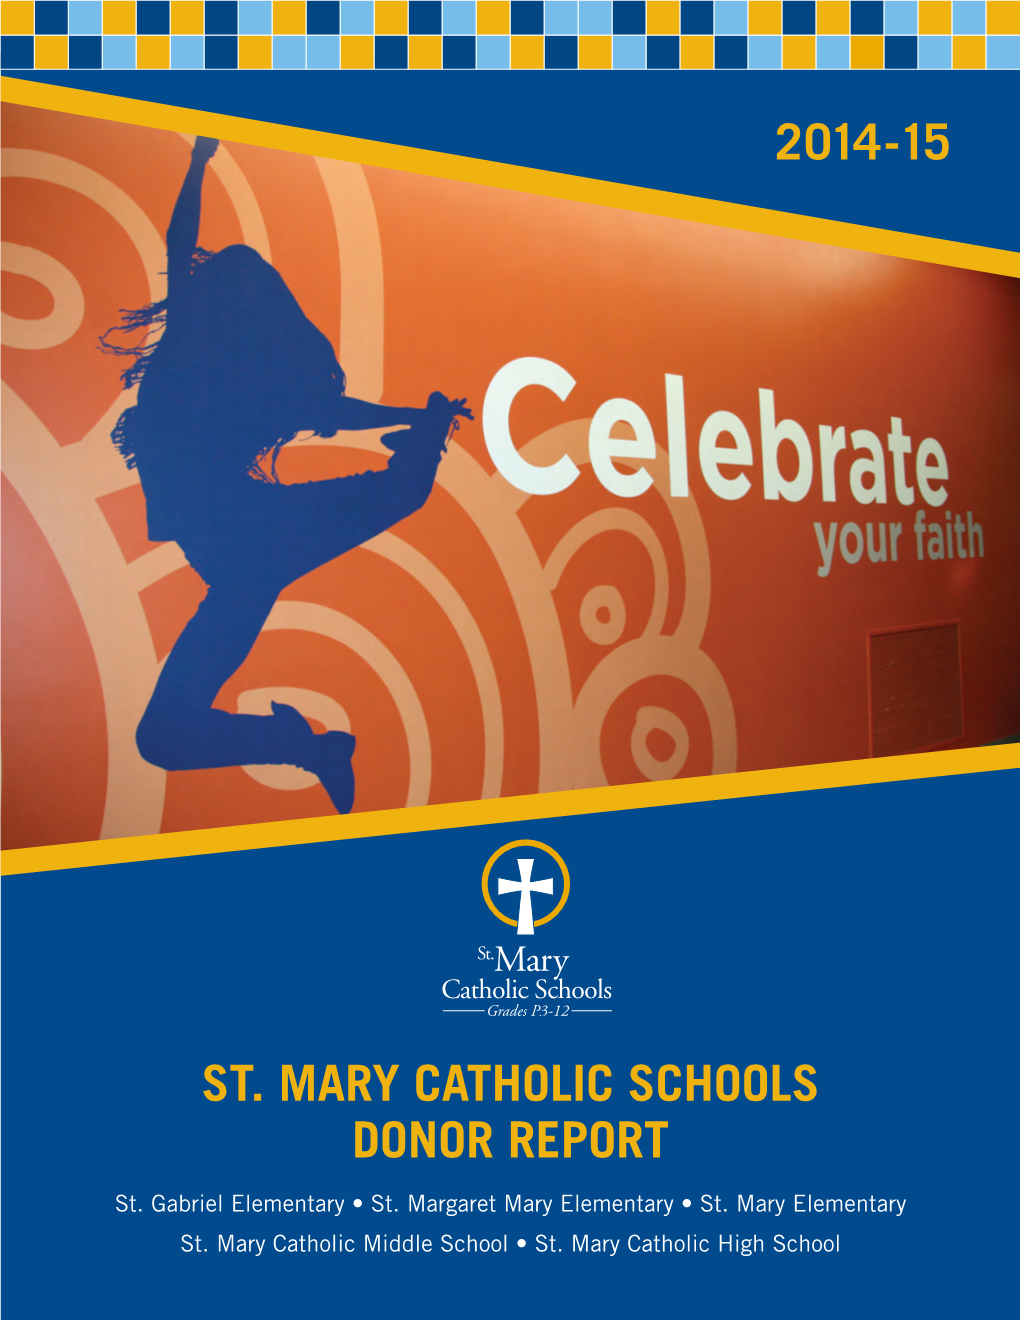 St. Mary Catholic Schools Donor Report 2014-15